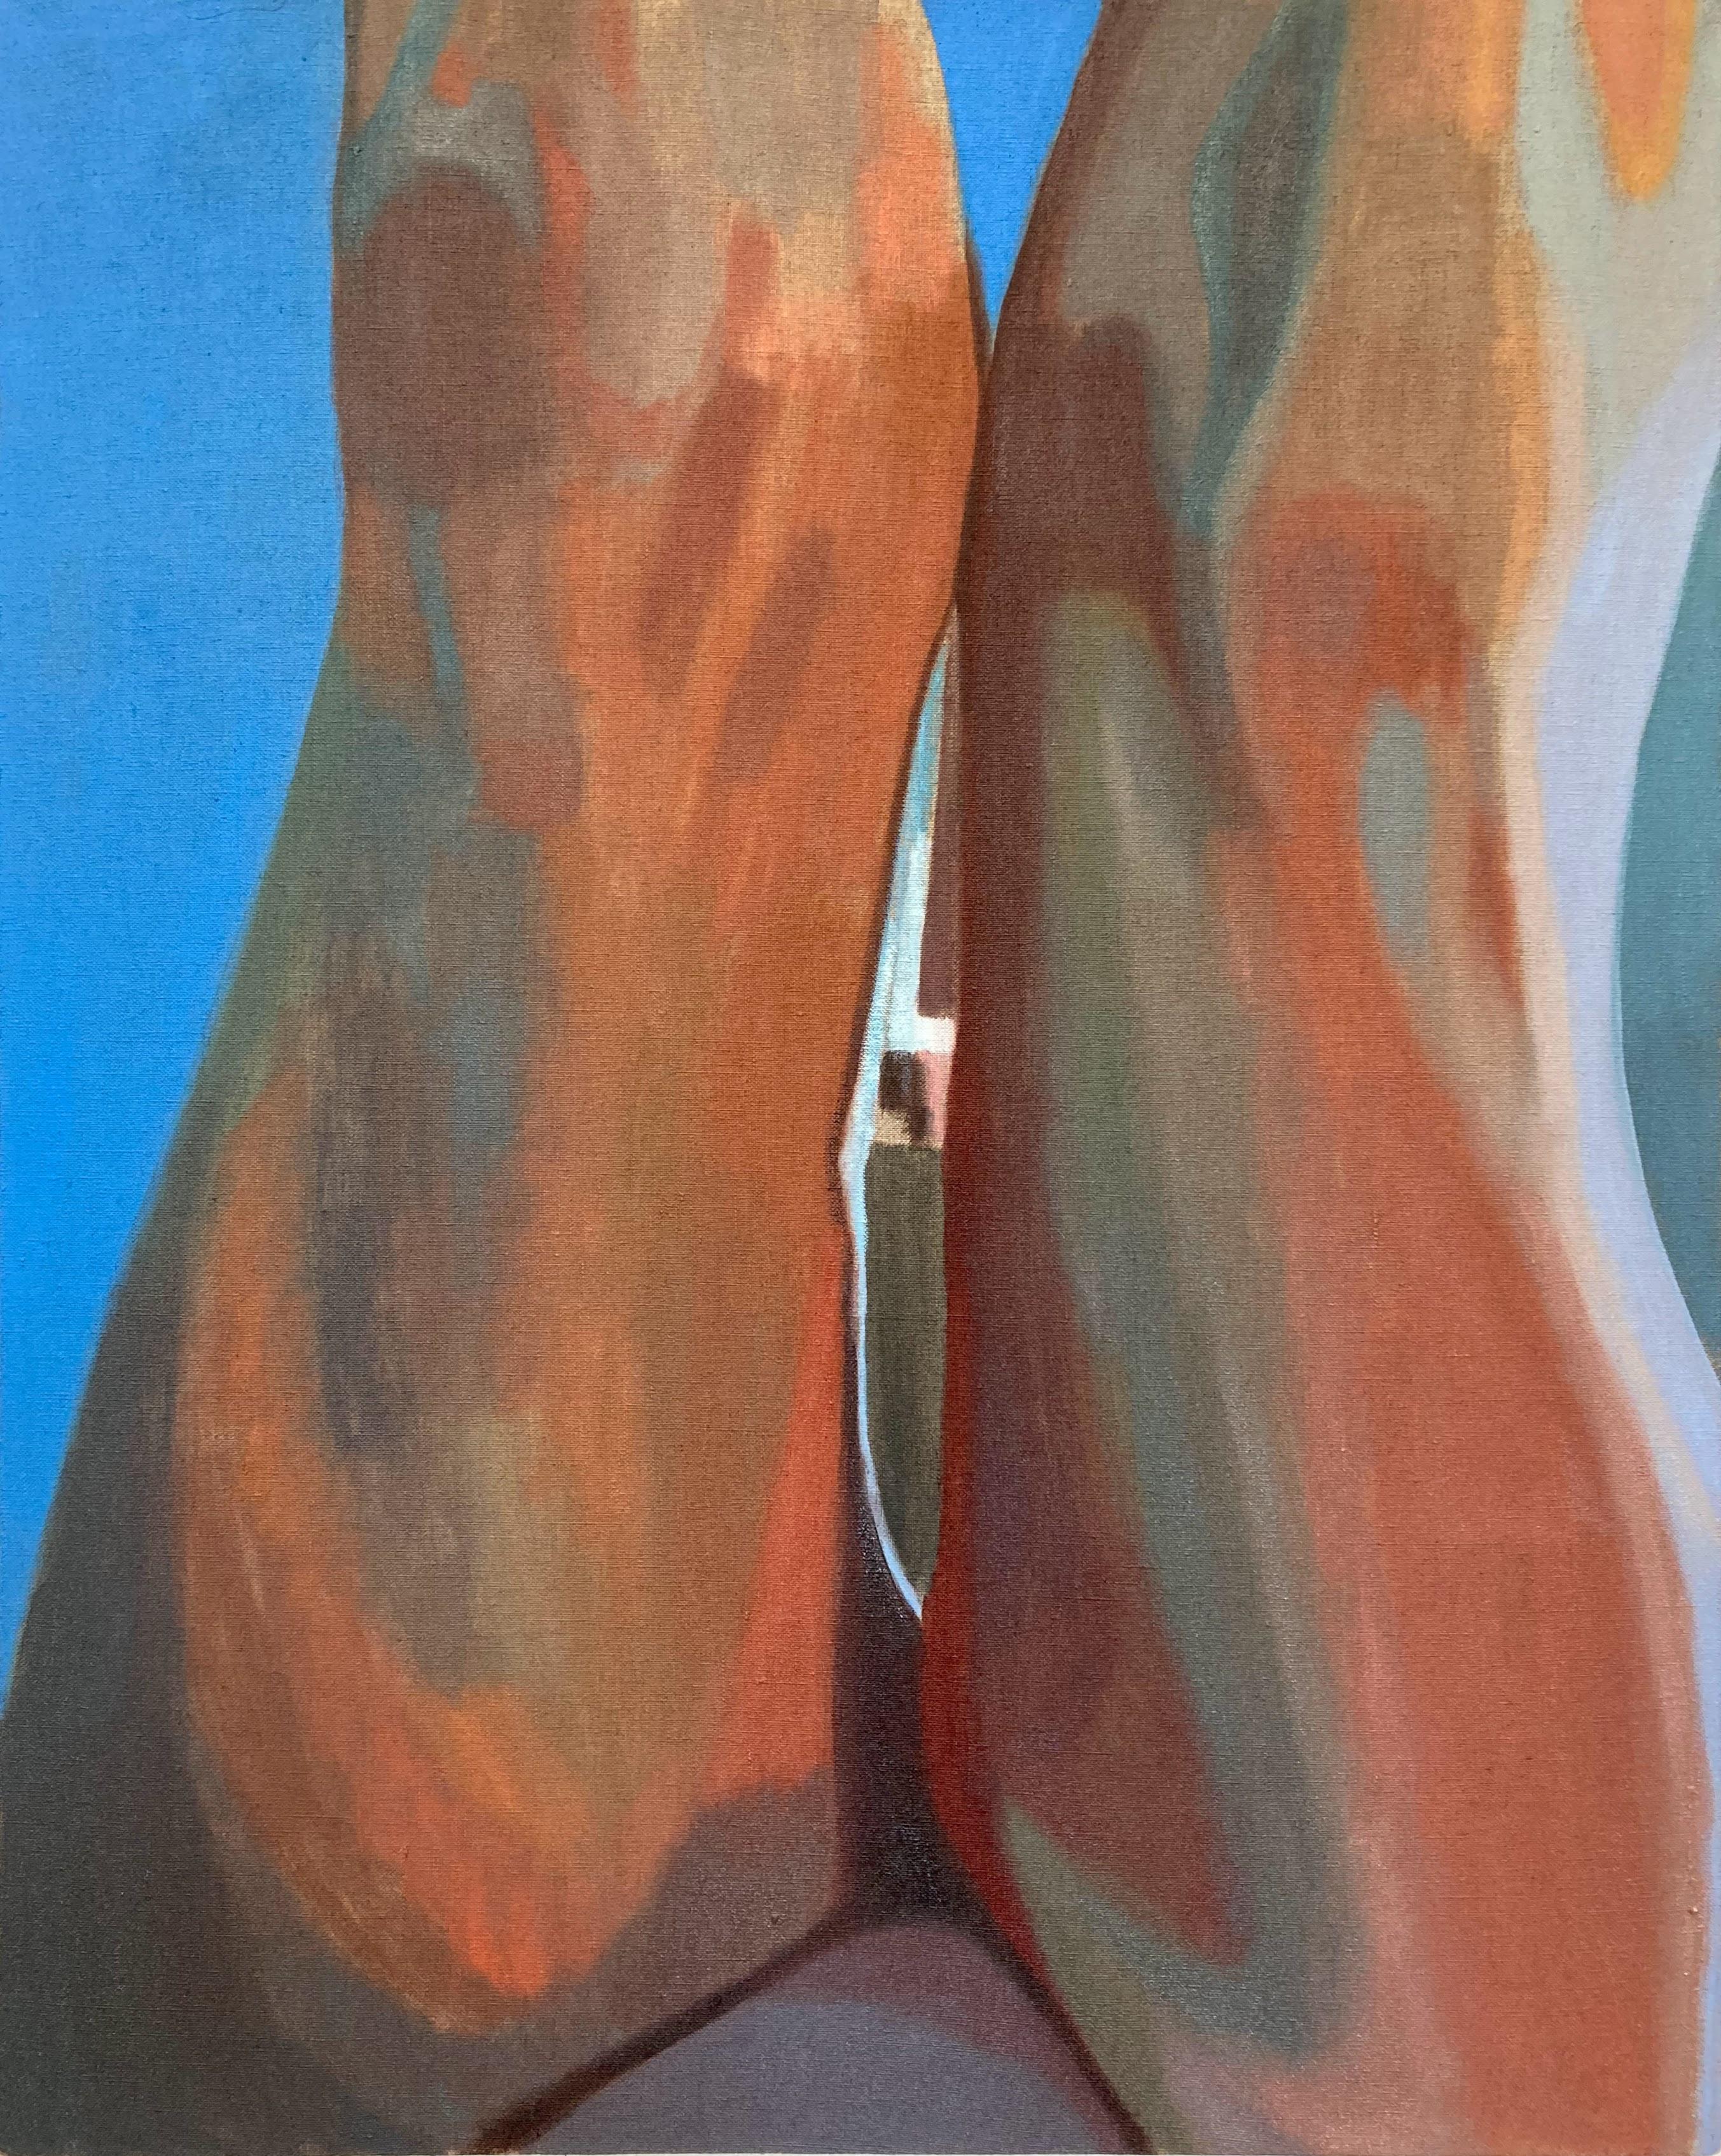 Chelsea Gibson Figurative Painting – "Hohes Selbst, unterer Körper" - Zeitgenössische figurative Ölmalerei